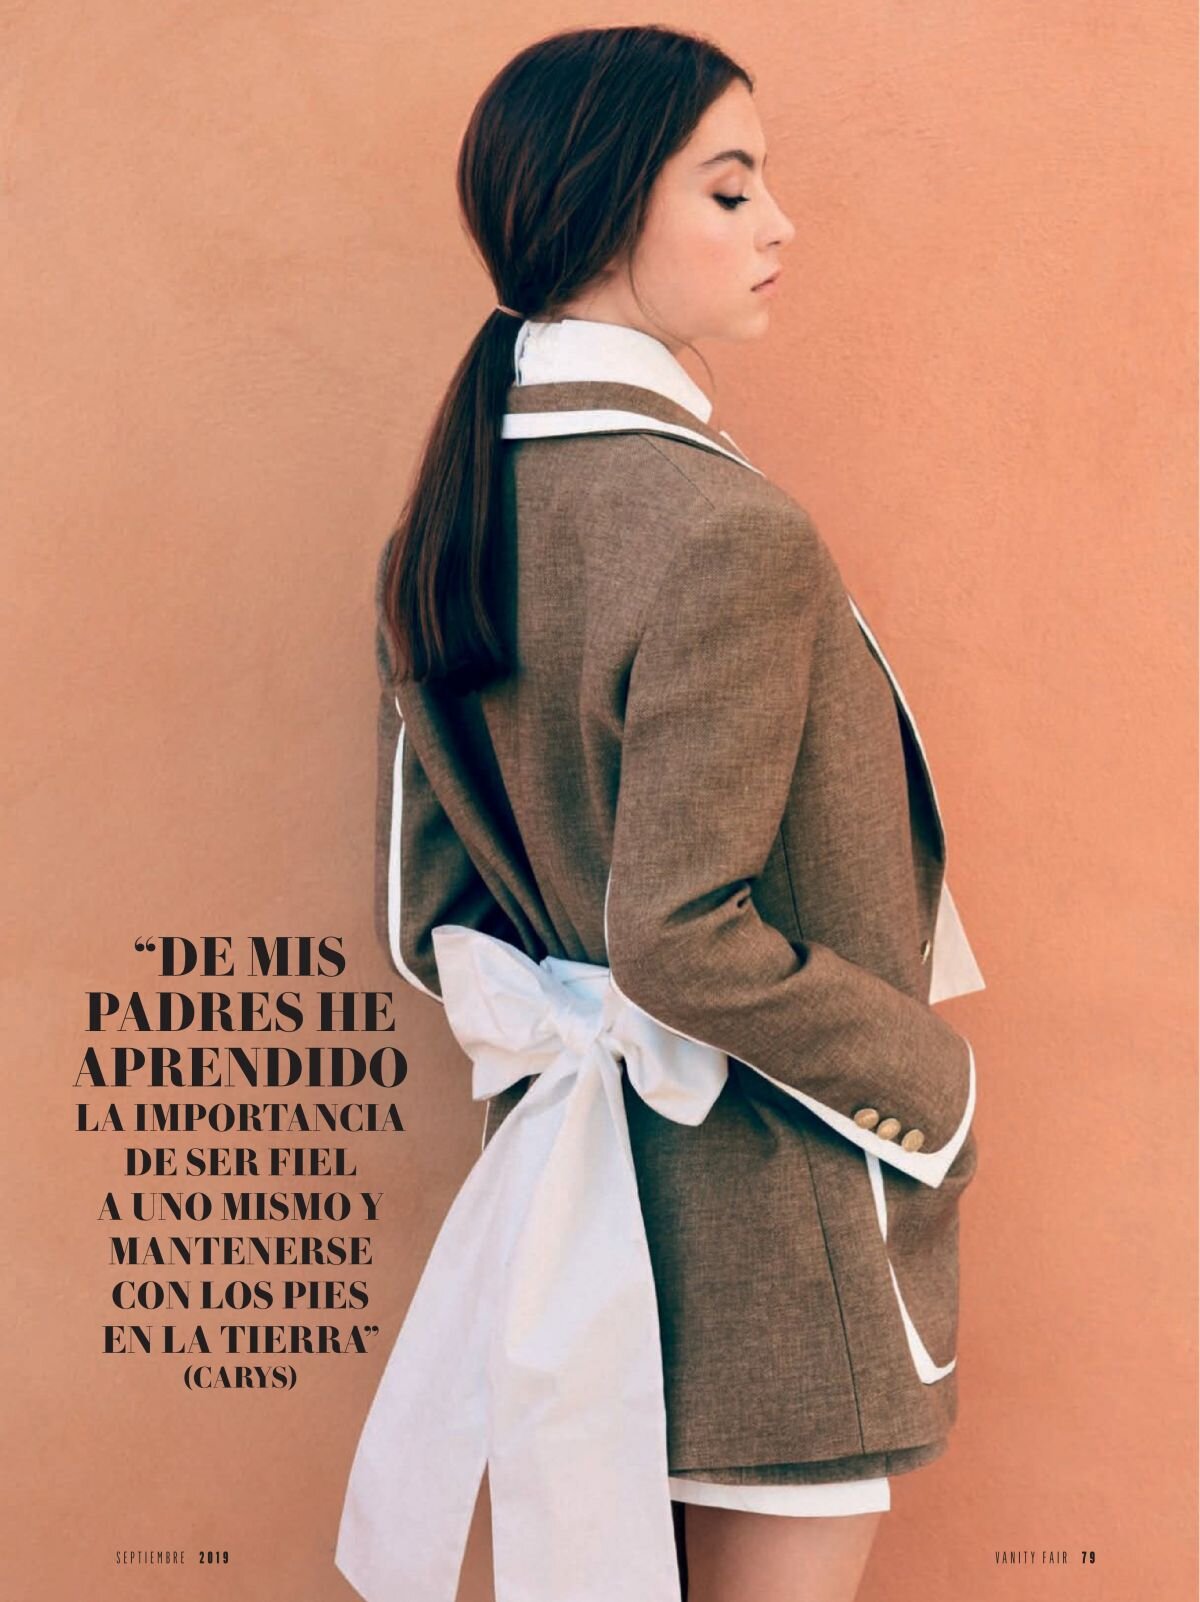 catherine-zeta-jones-and-carys-zeta-douglas-in-vanity-fair-magazine-spain-september-2019-1.jpg